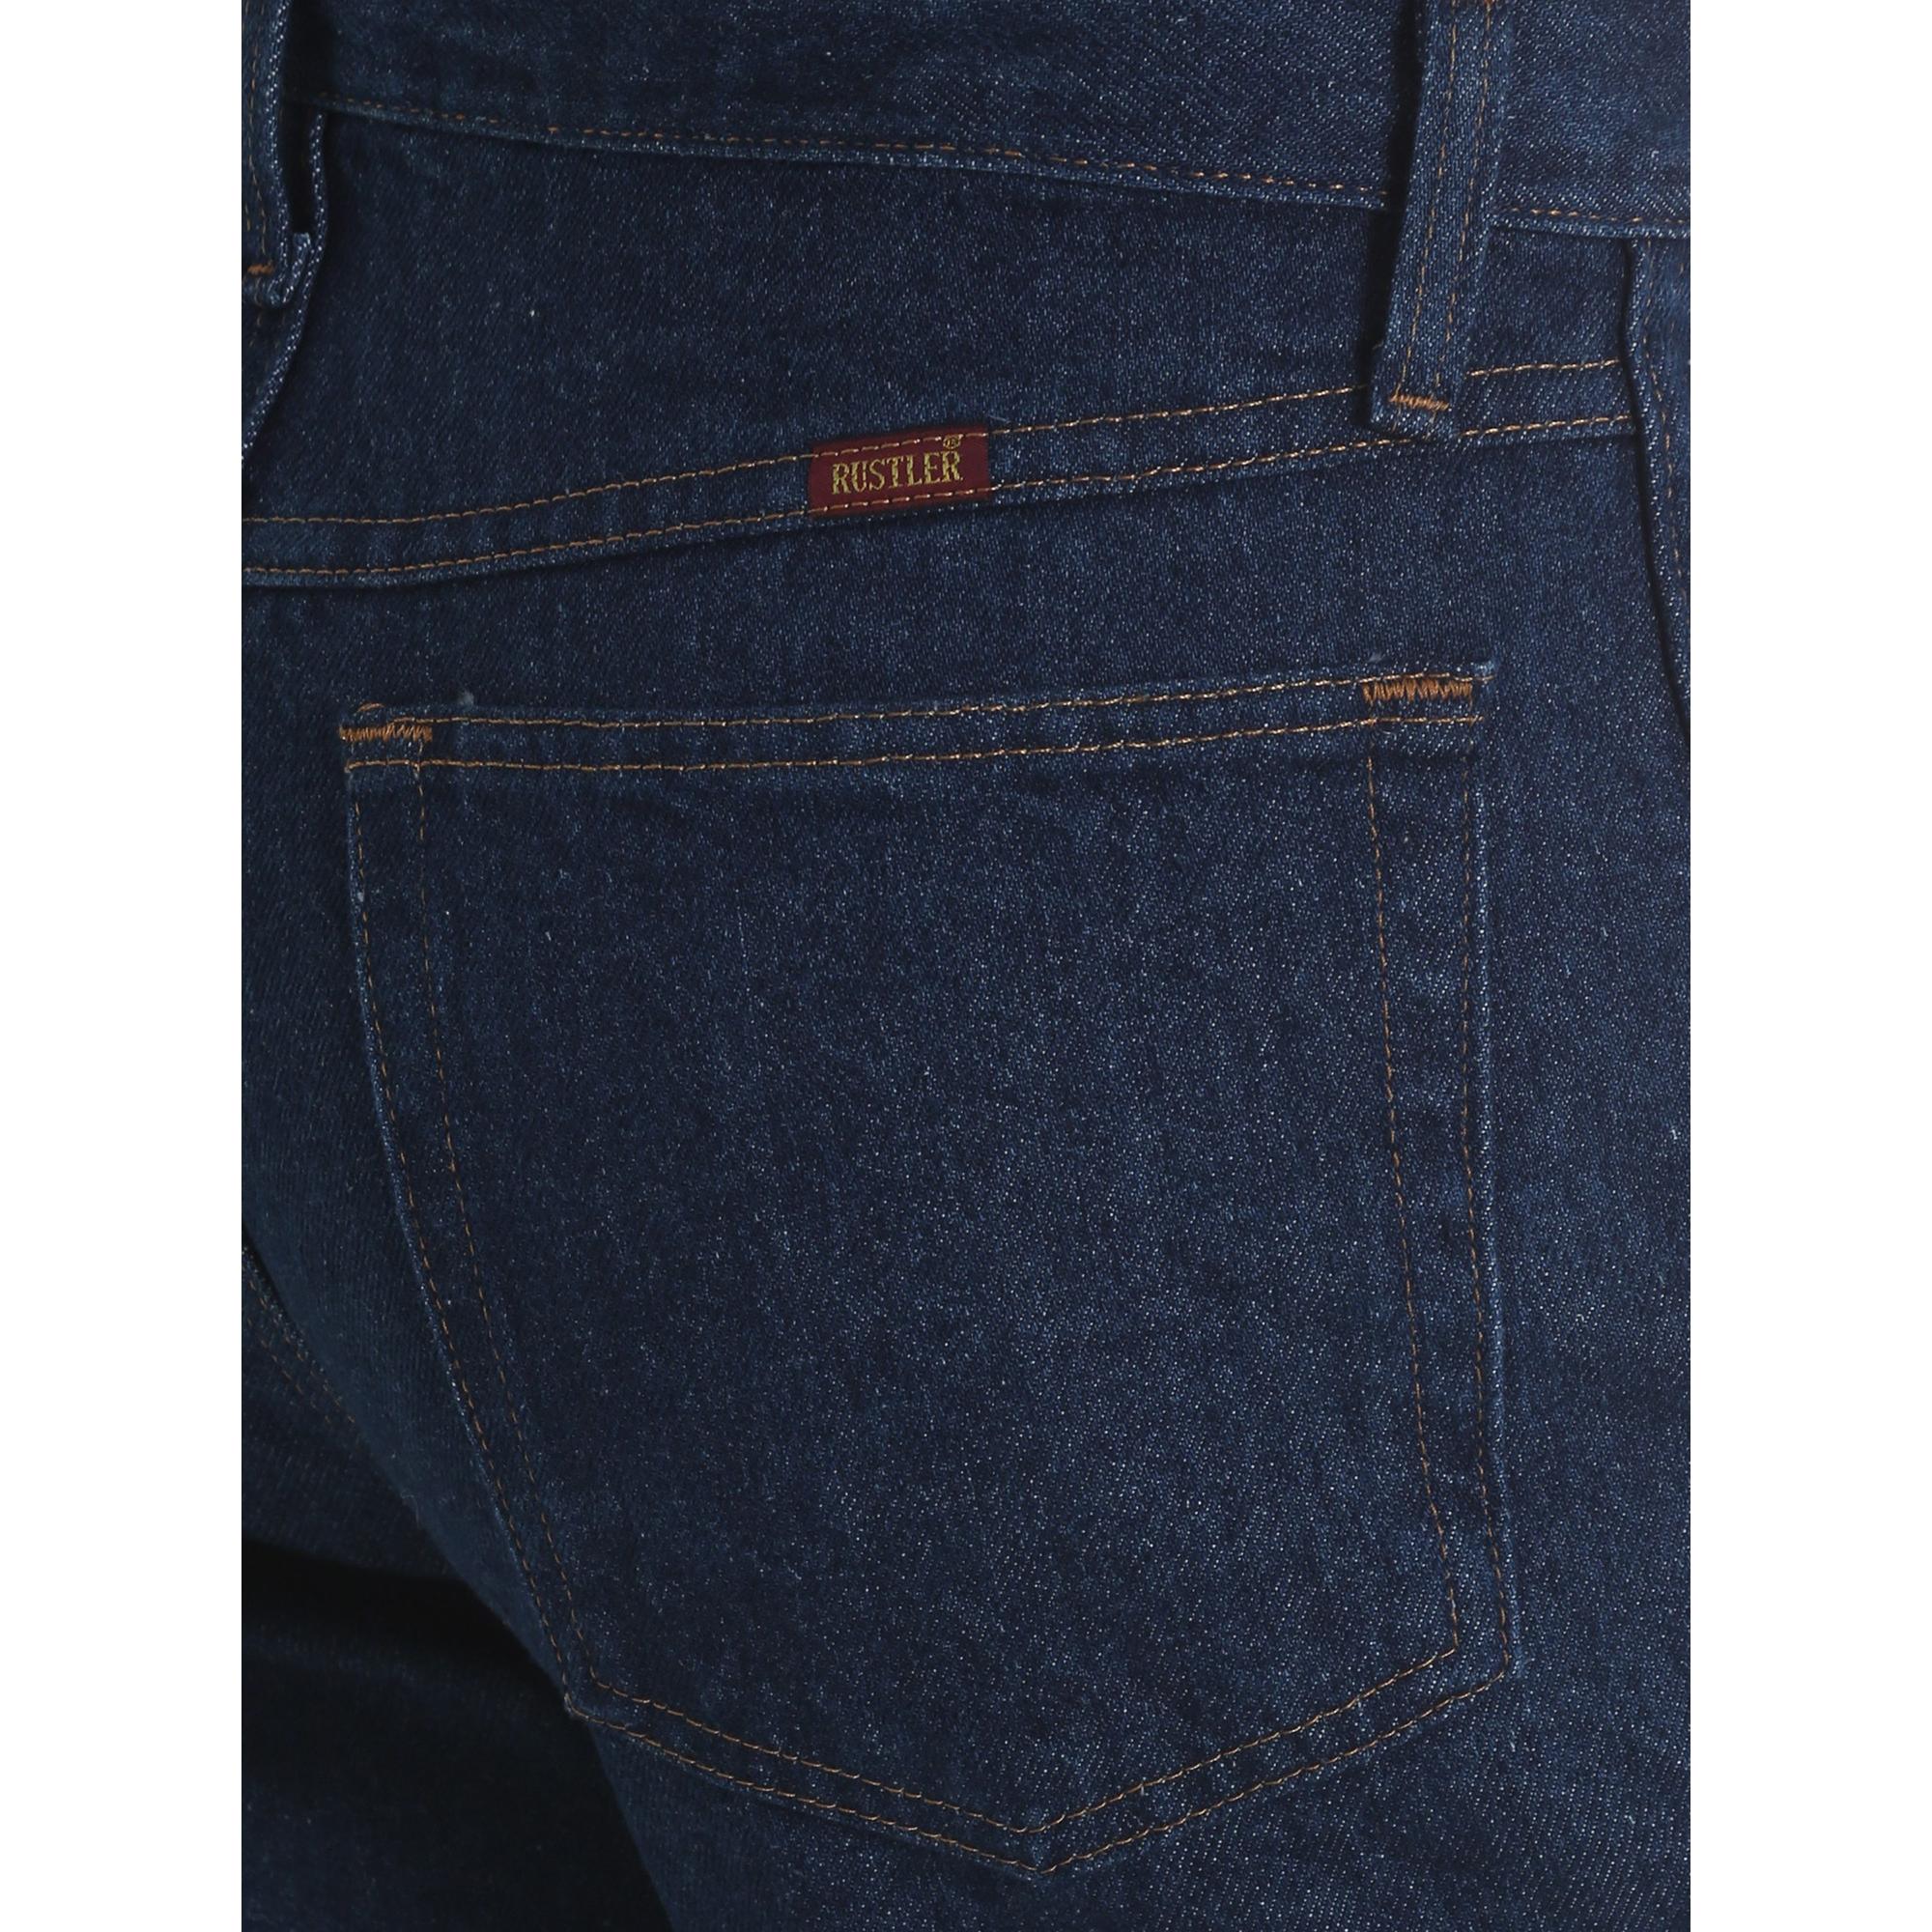 Wrangler Rustler Men's and Big Men's Regular Fit Jeans - image 5 of 6